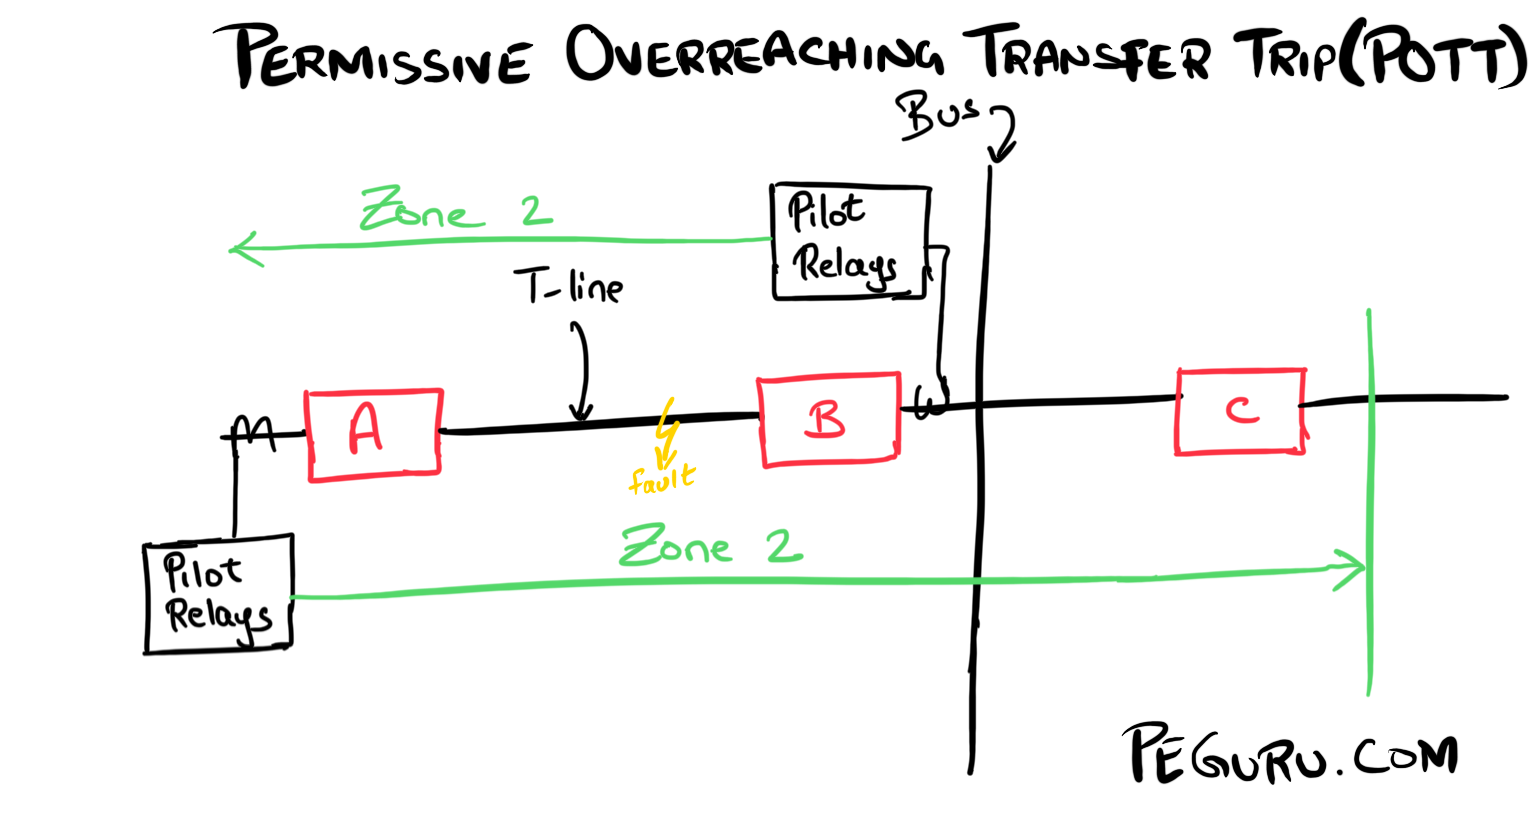 Permissive Overreaching Transfer Trip Scheme (POTT)